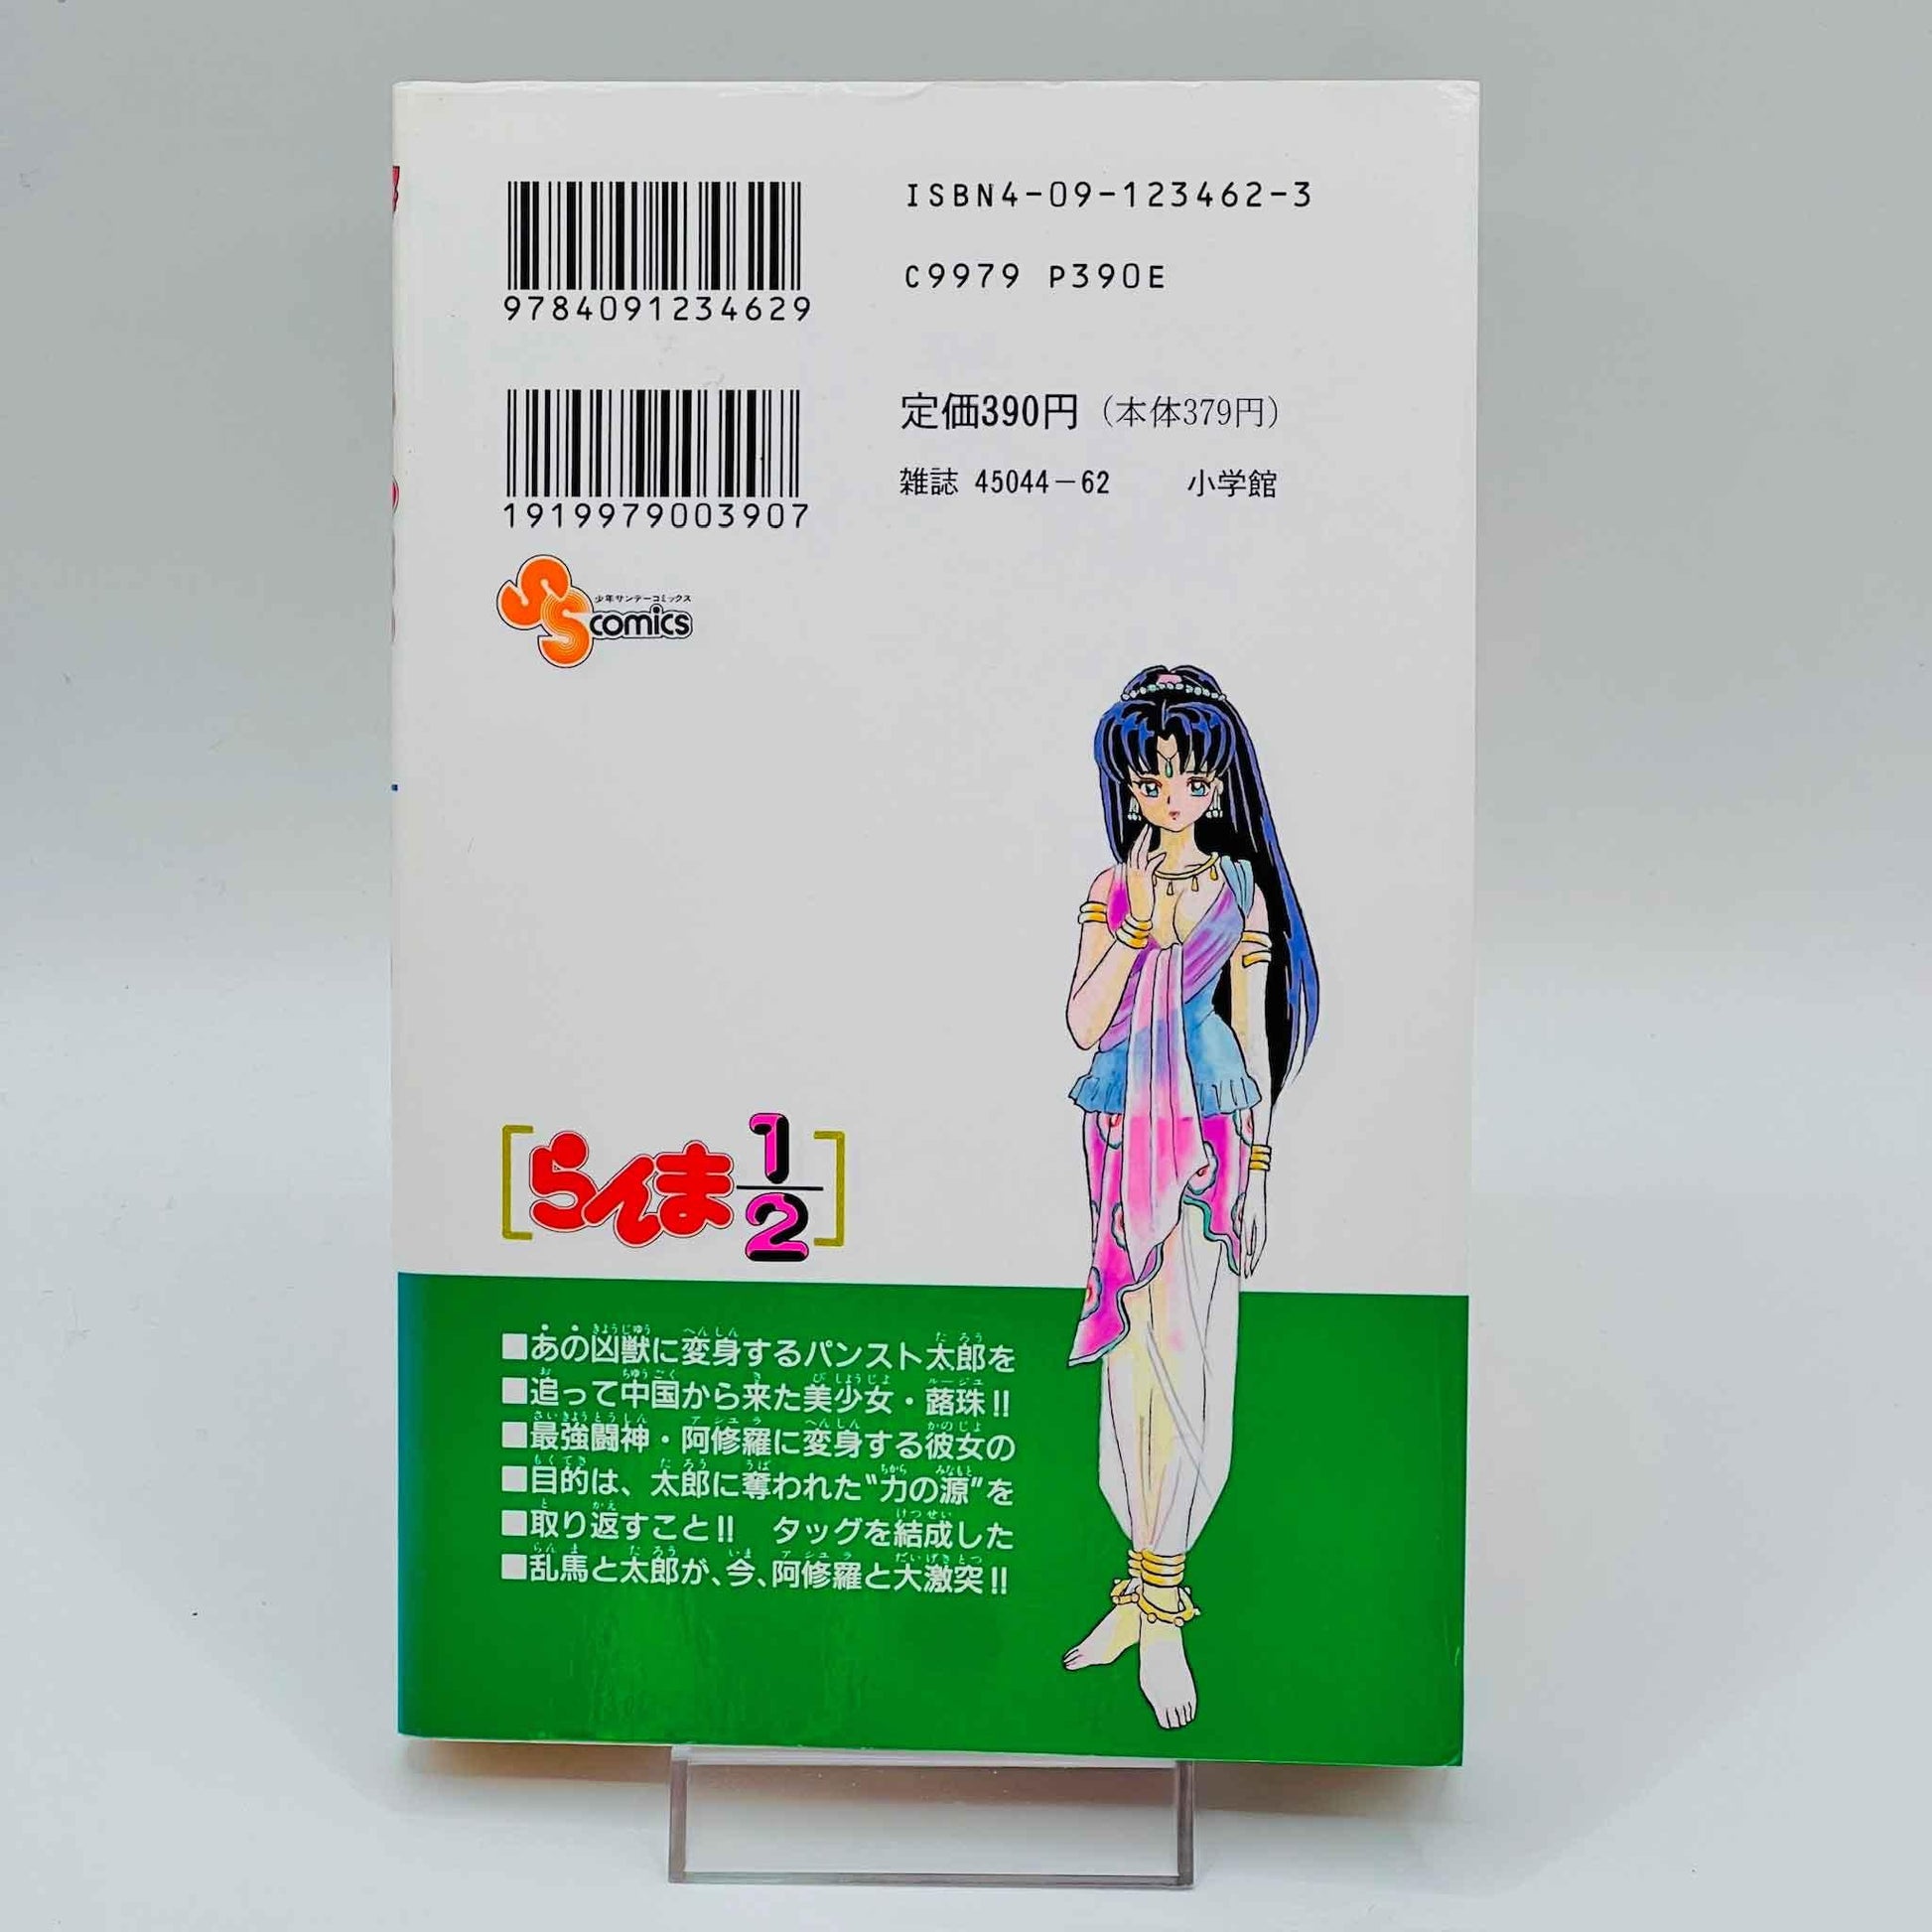 Ranma ½ - Volume 32 - 1stPrint.net - 1st First Print Edition Manga Store - M-RANMA-32-001